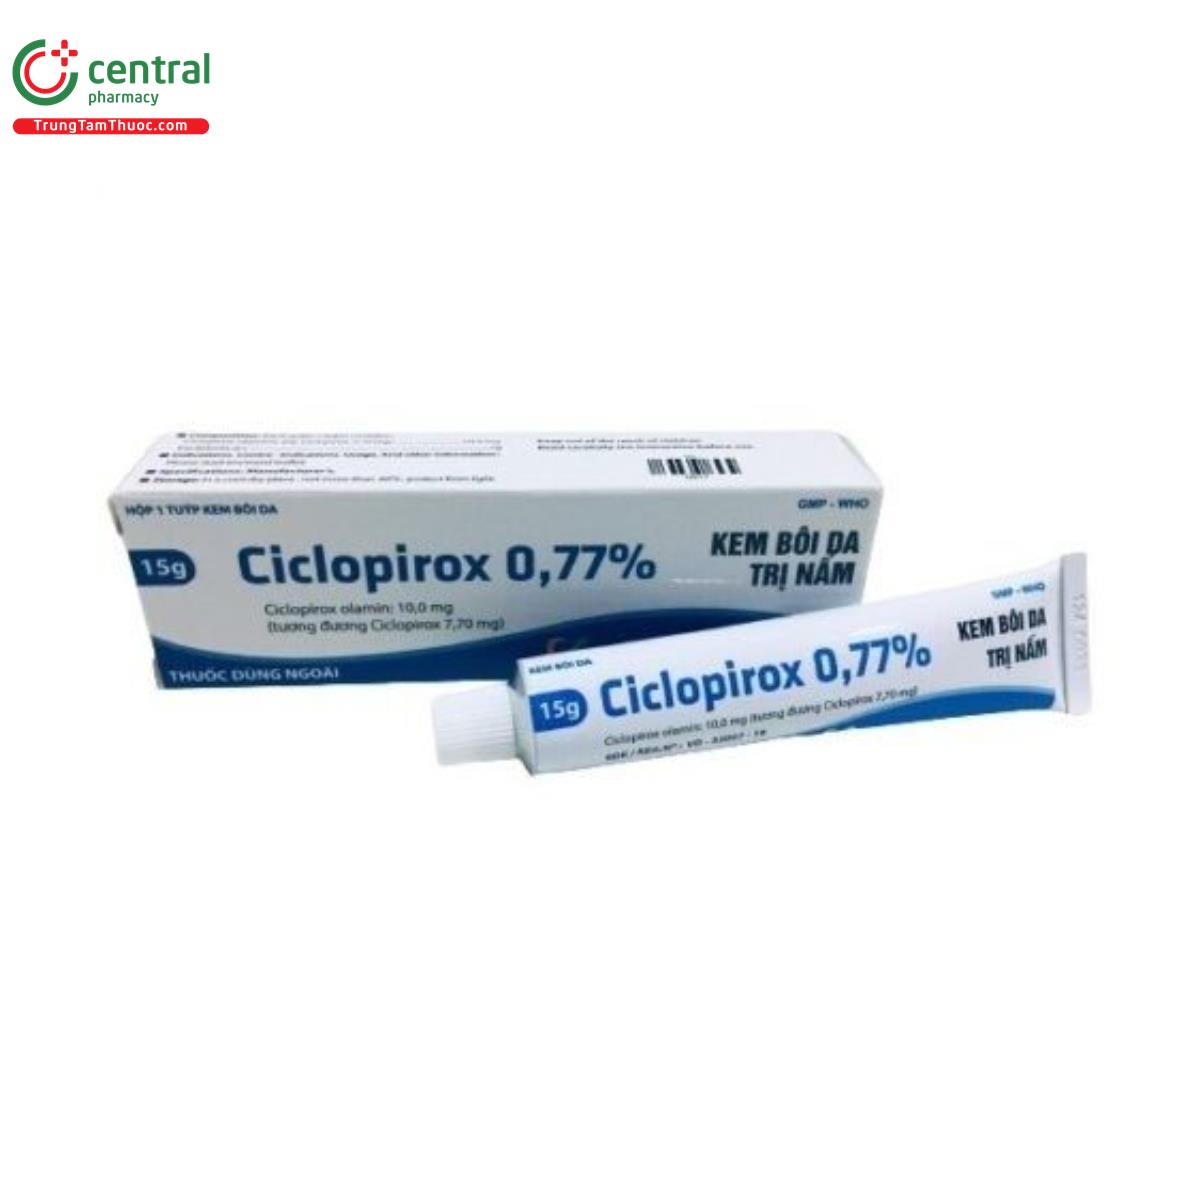 ciclopirox 077 vcp 6 O6575